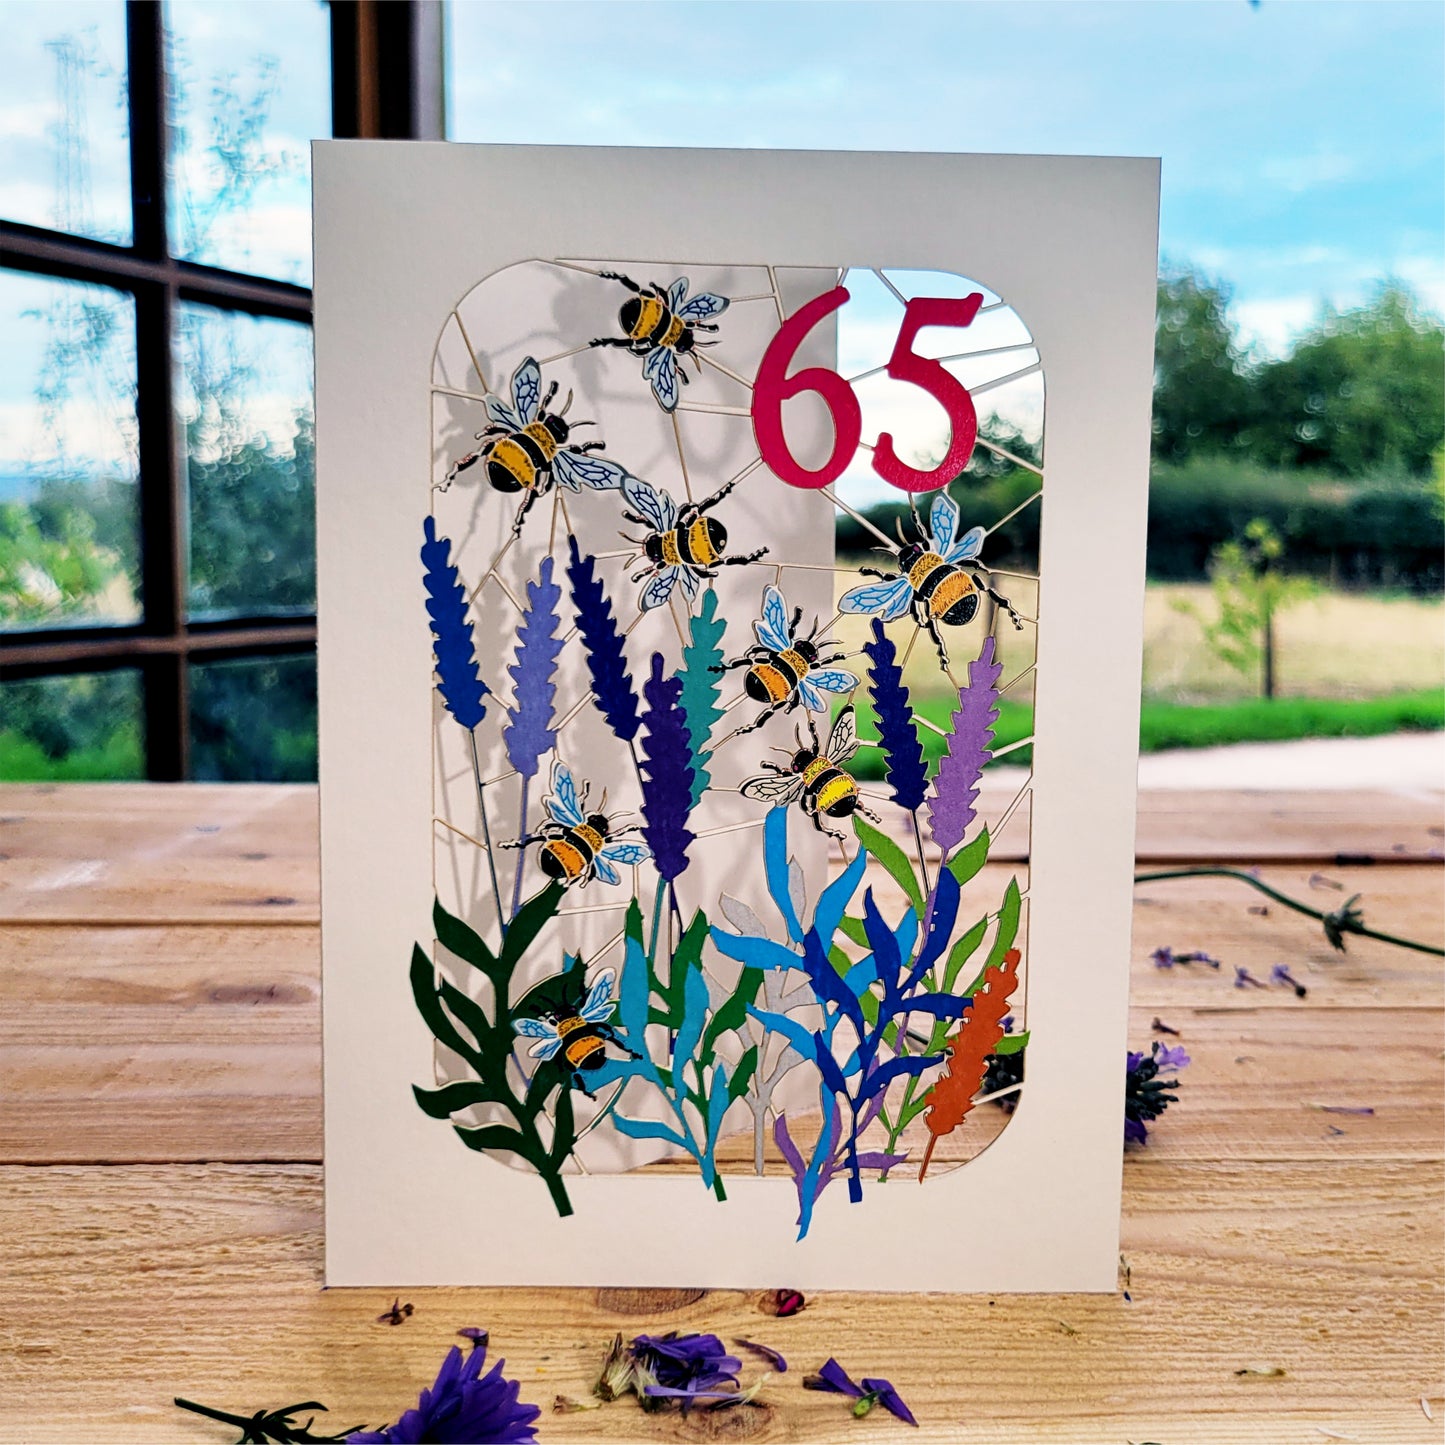 Age 65 Birthday Card, 65th Birthday Card, Bee Card - Be065